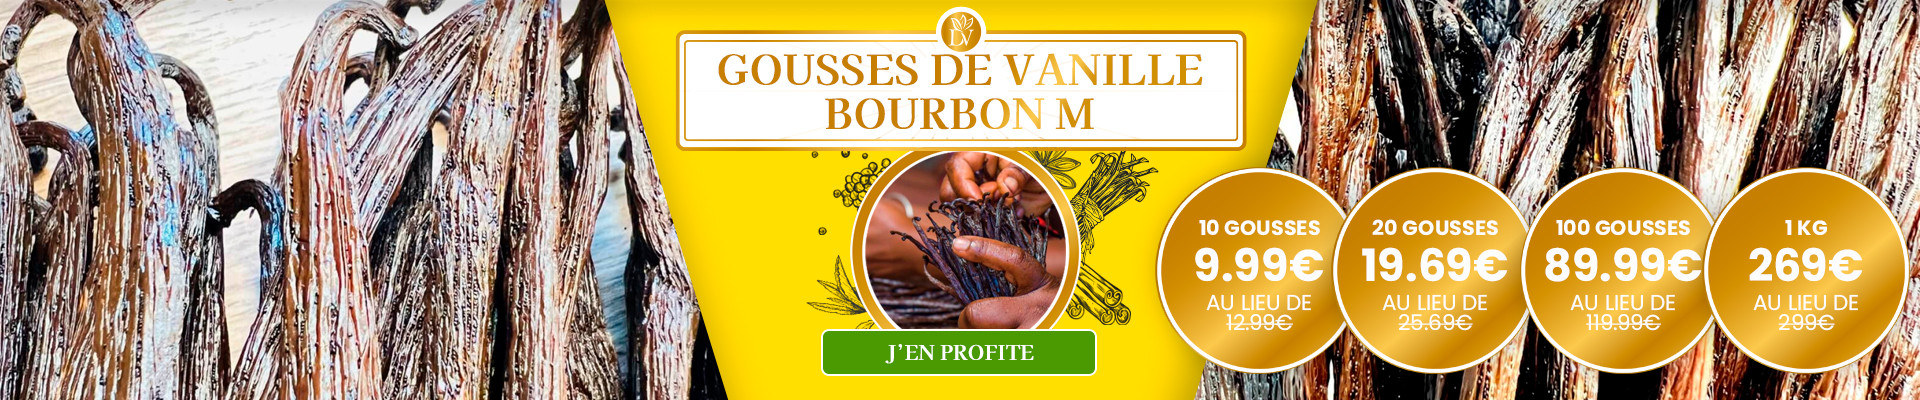 https://www.davidvanille.com/fr/gousses-de-vanille/251-3023-gousses-de-vanille-bourbon-madagascar-label-bourbon-qualite-tk.html#/227-quantite-10_gousses